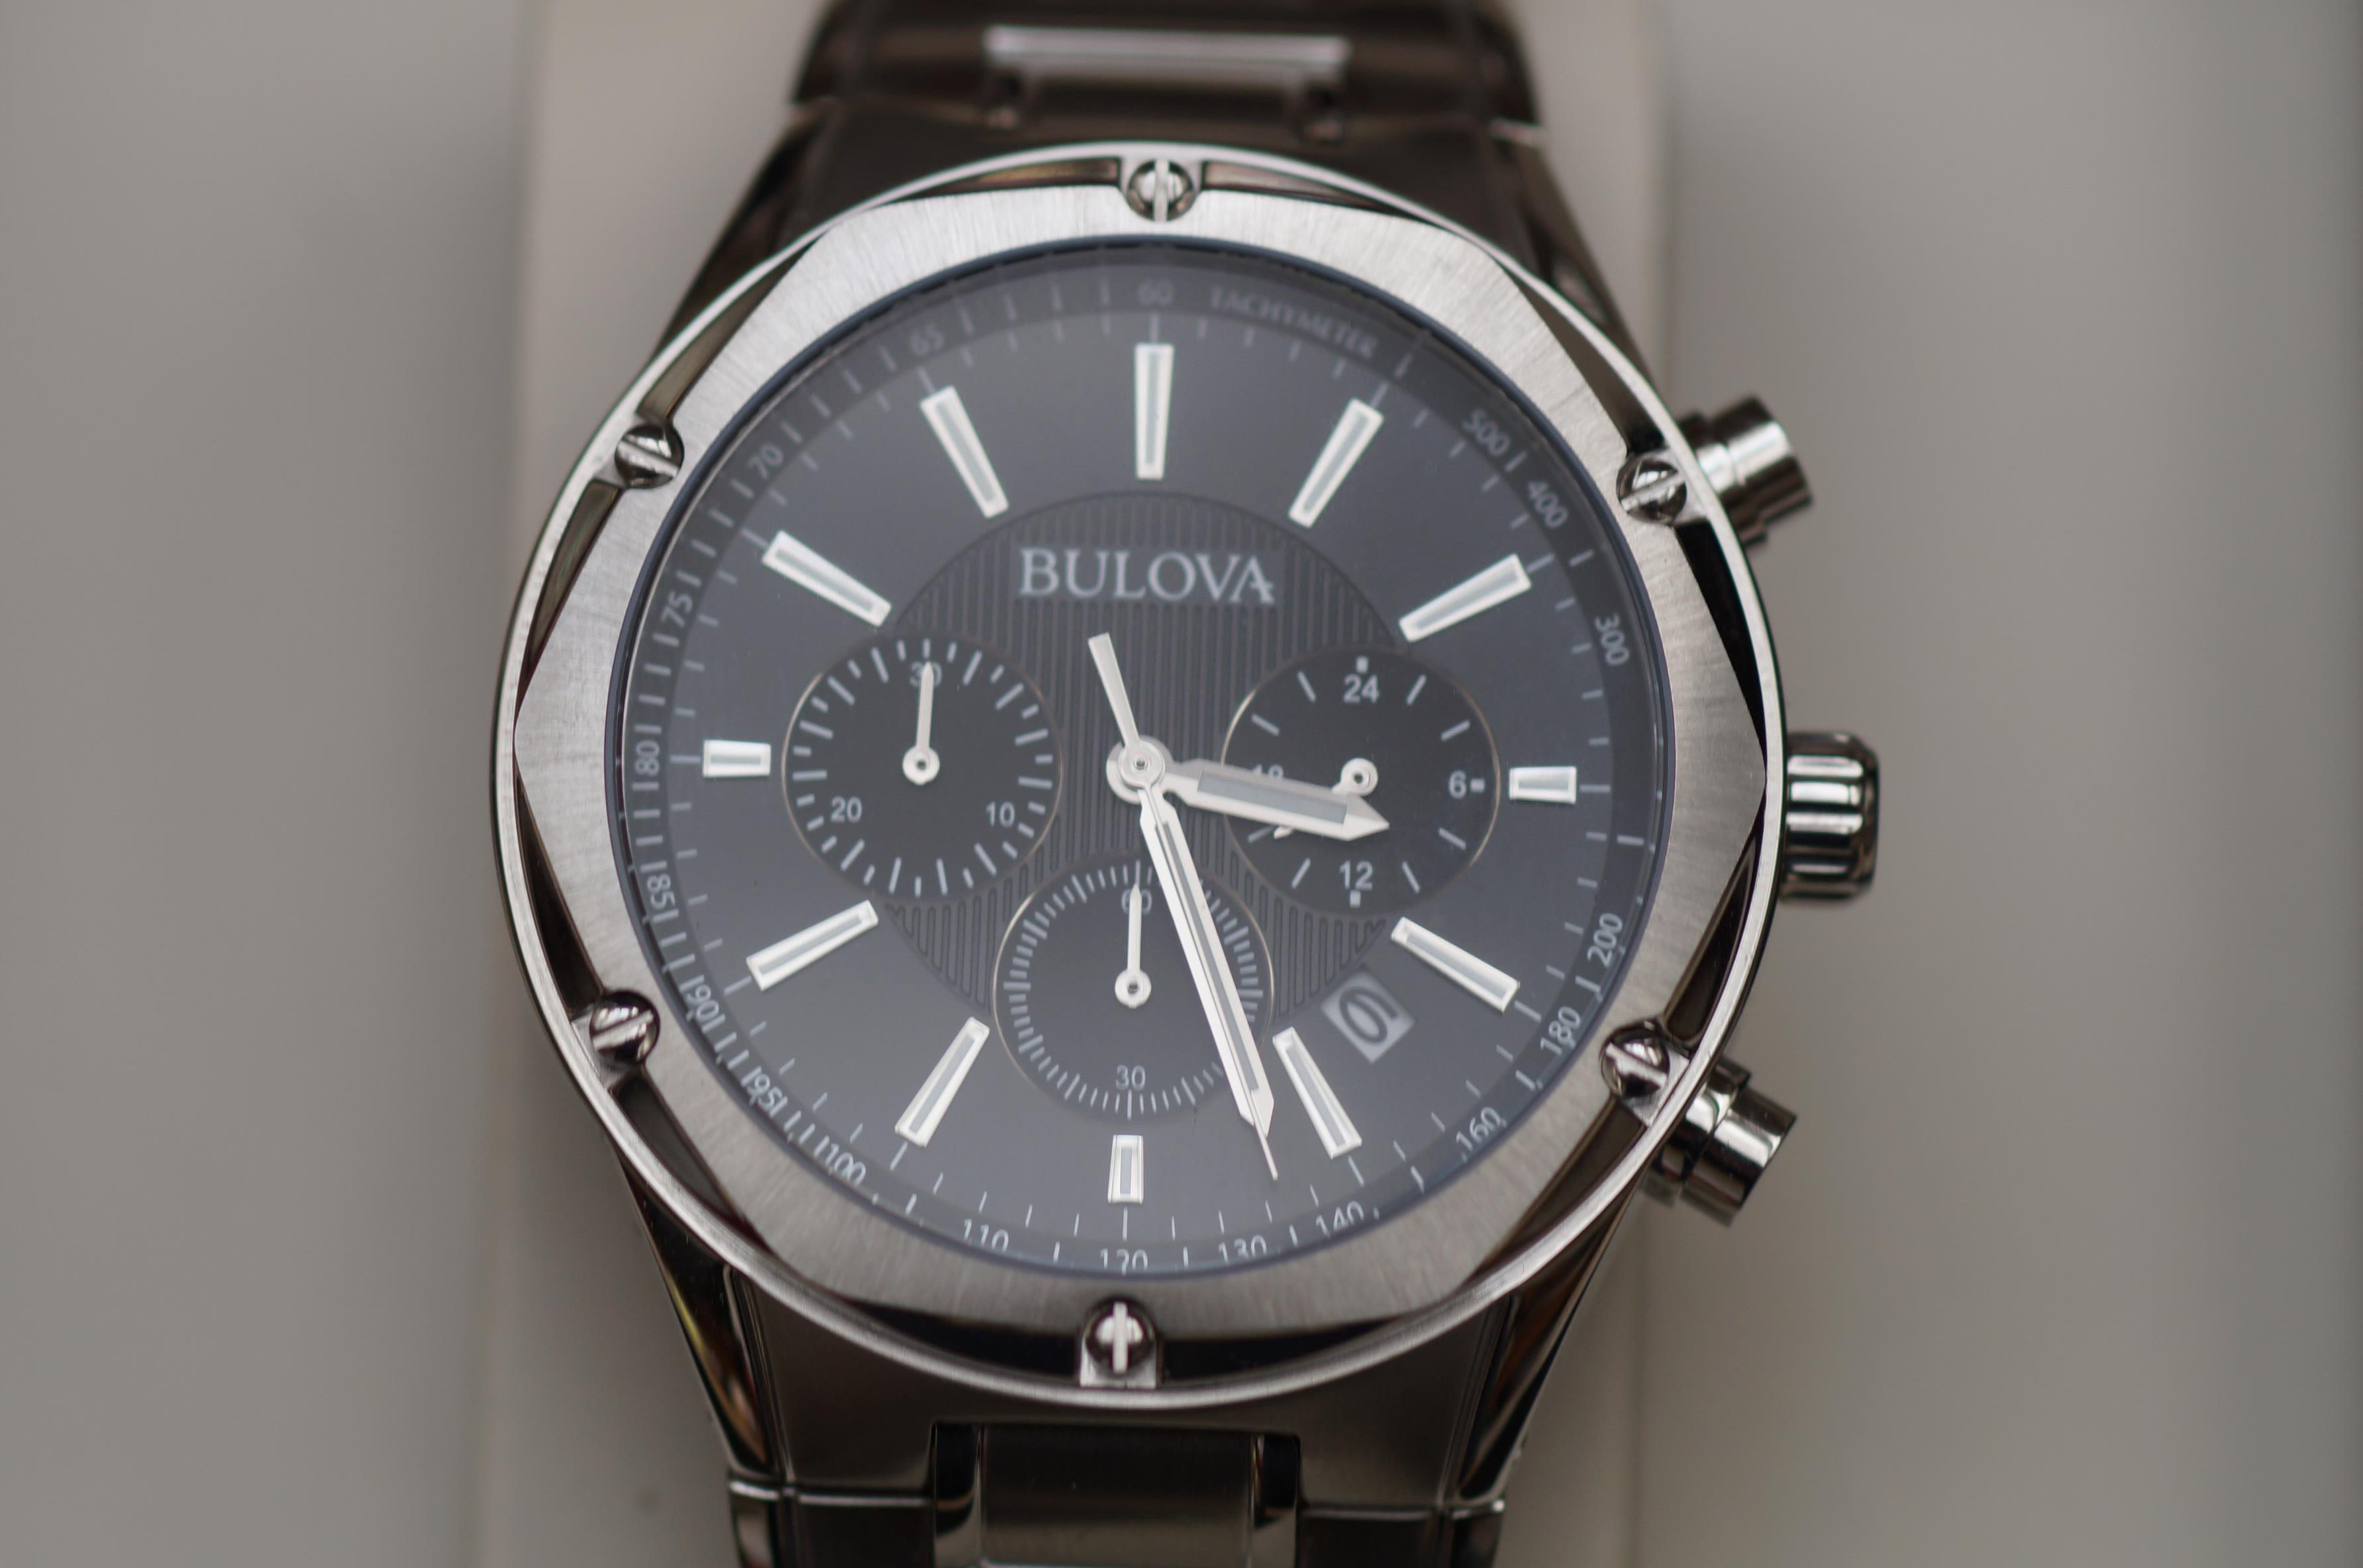 Bulova chronograph wristwatch, as new